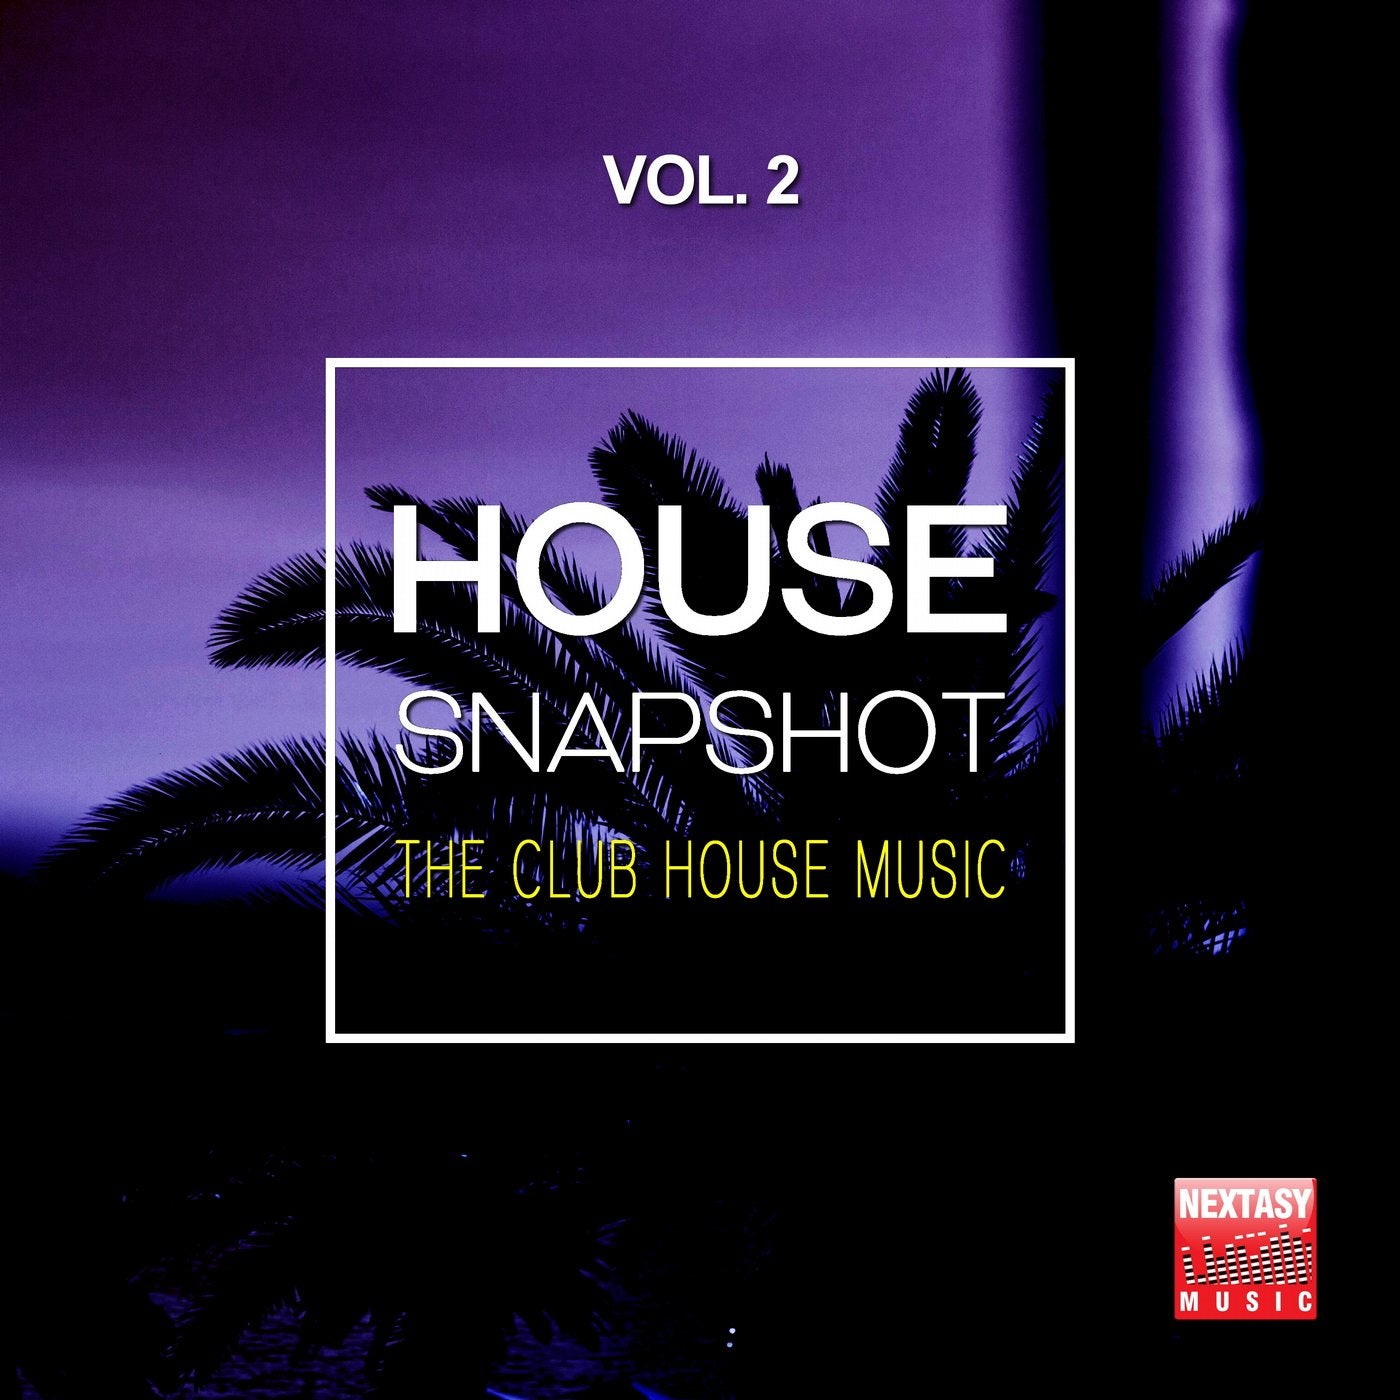 House Snapshot, Vol. 2 (The Club House Music)